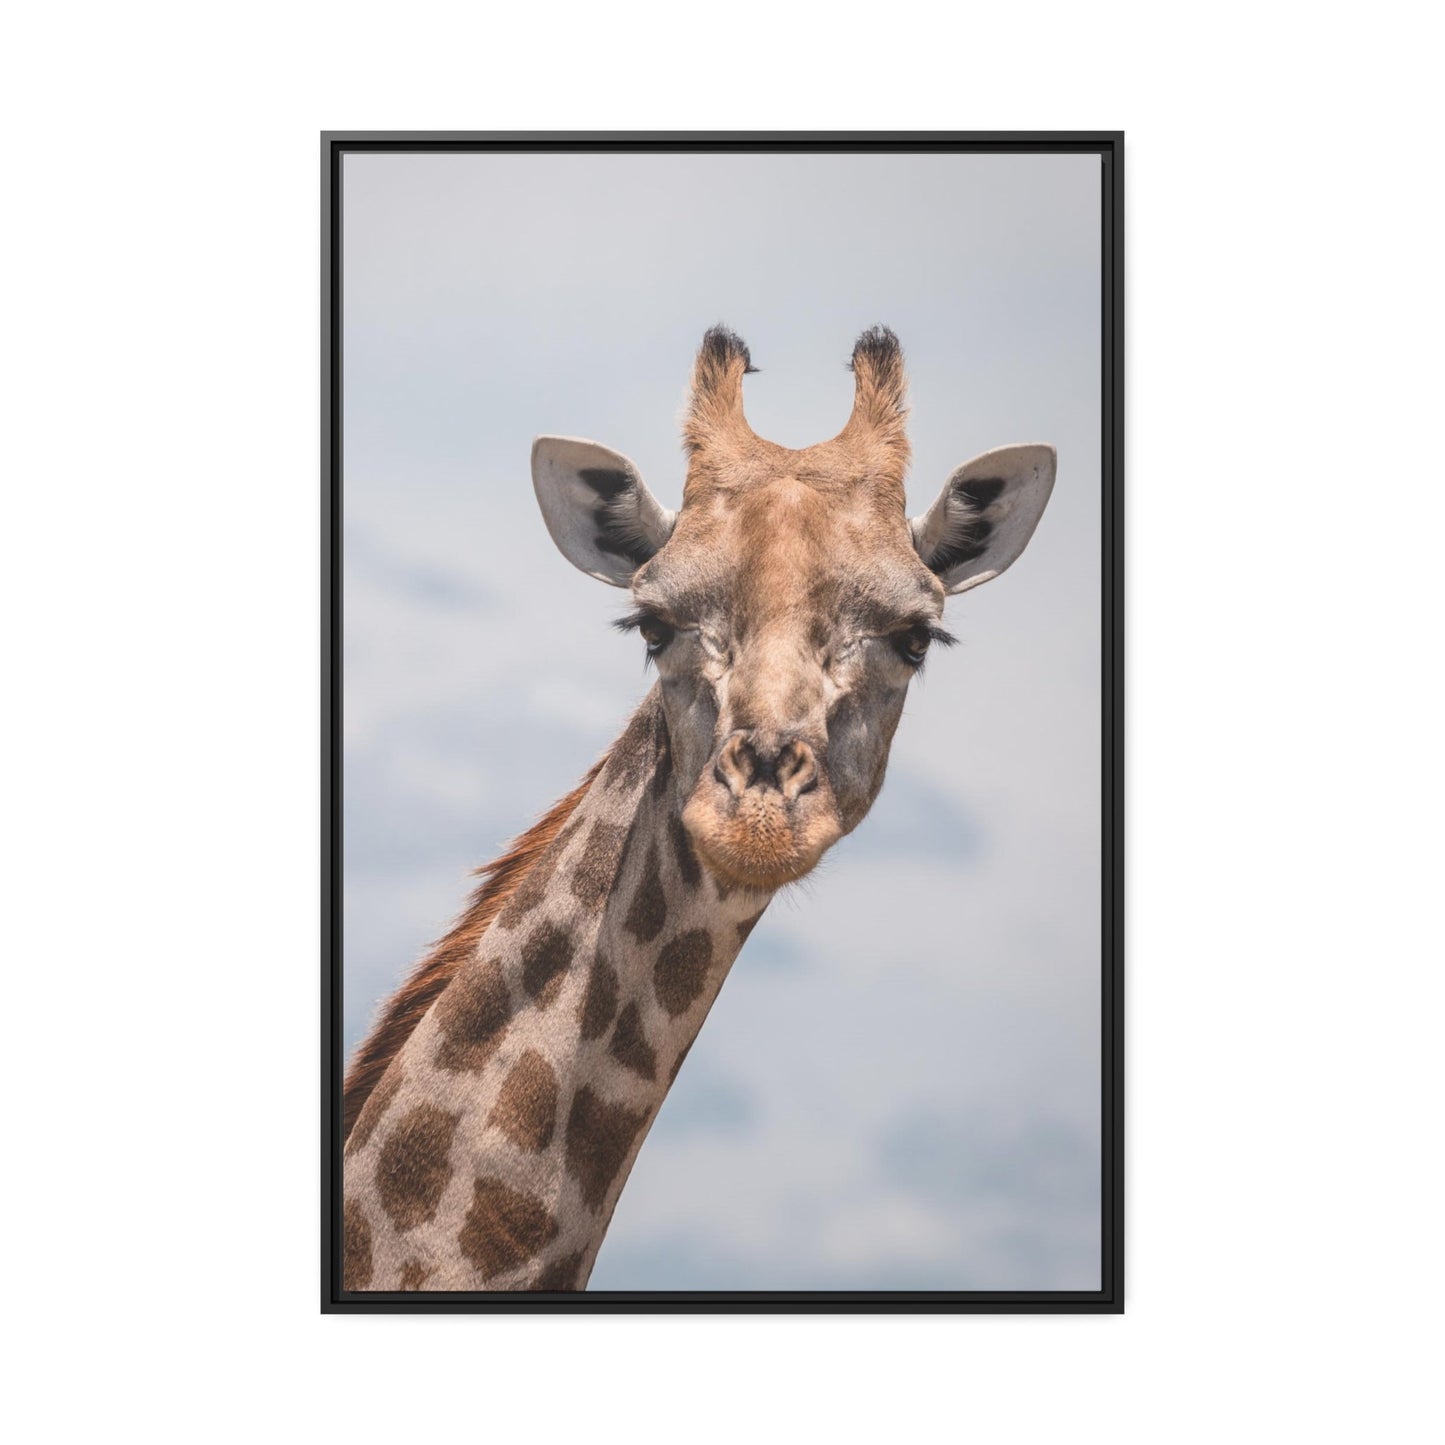 Captivating Creature: A Stunning Giraffe on Canvas & Poster